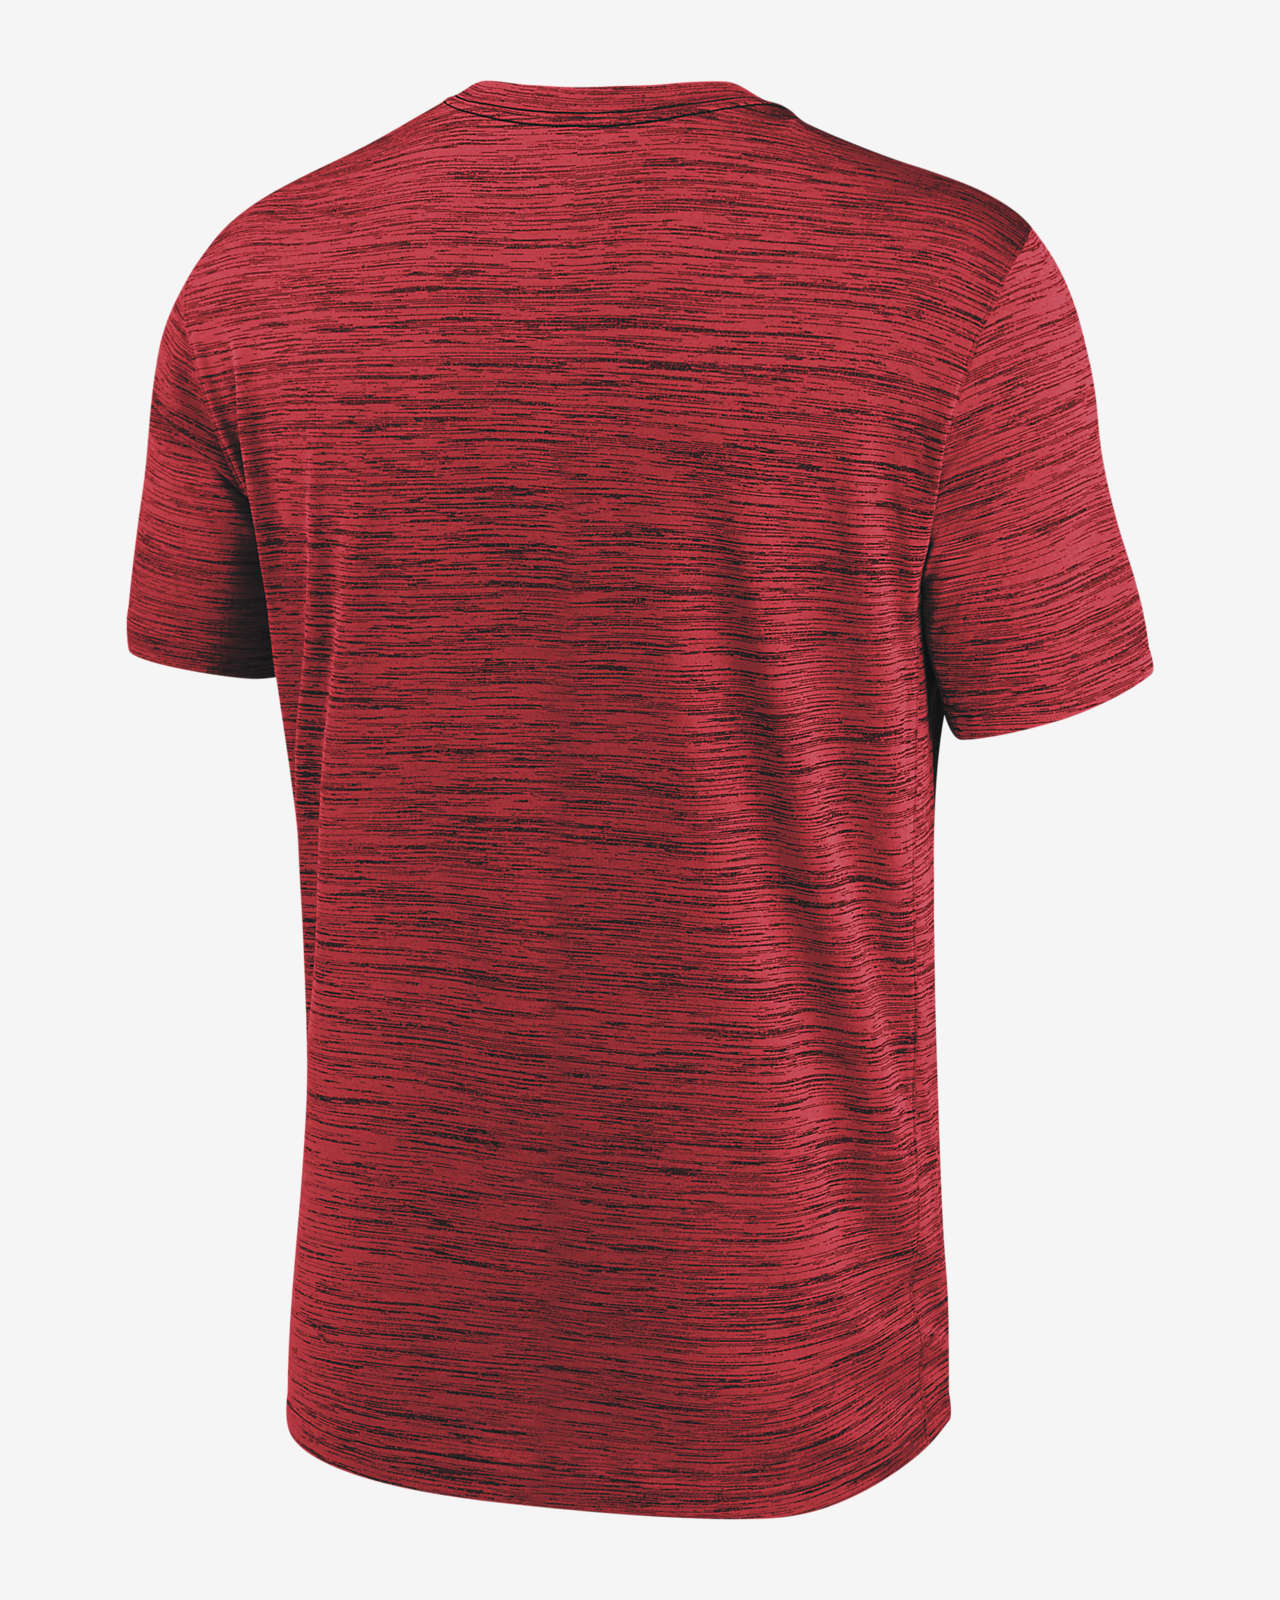 Nike Logo Velocity (MLB Washington Nationals) Men's T-Shirt.